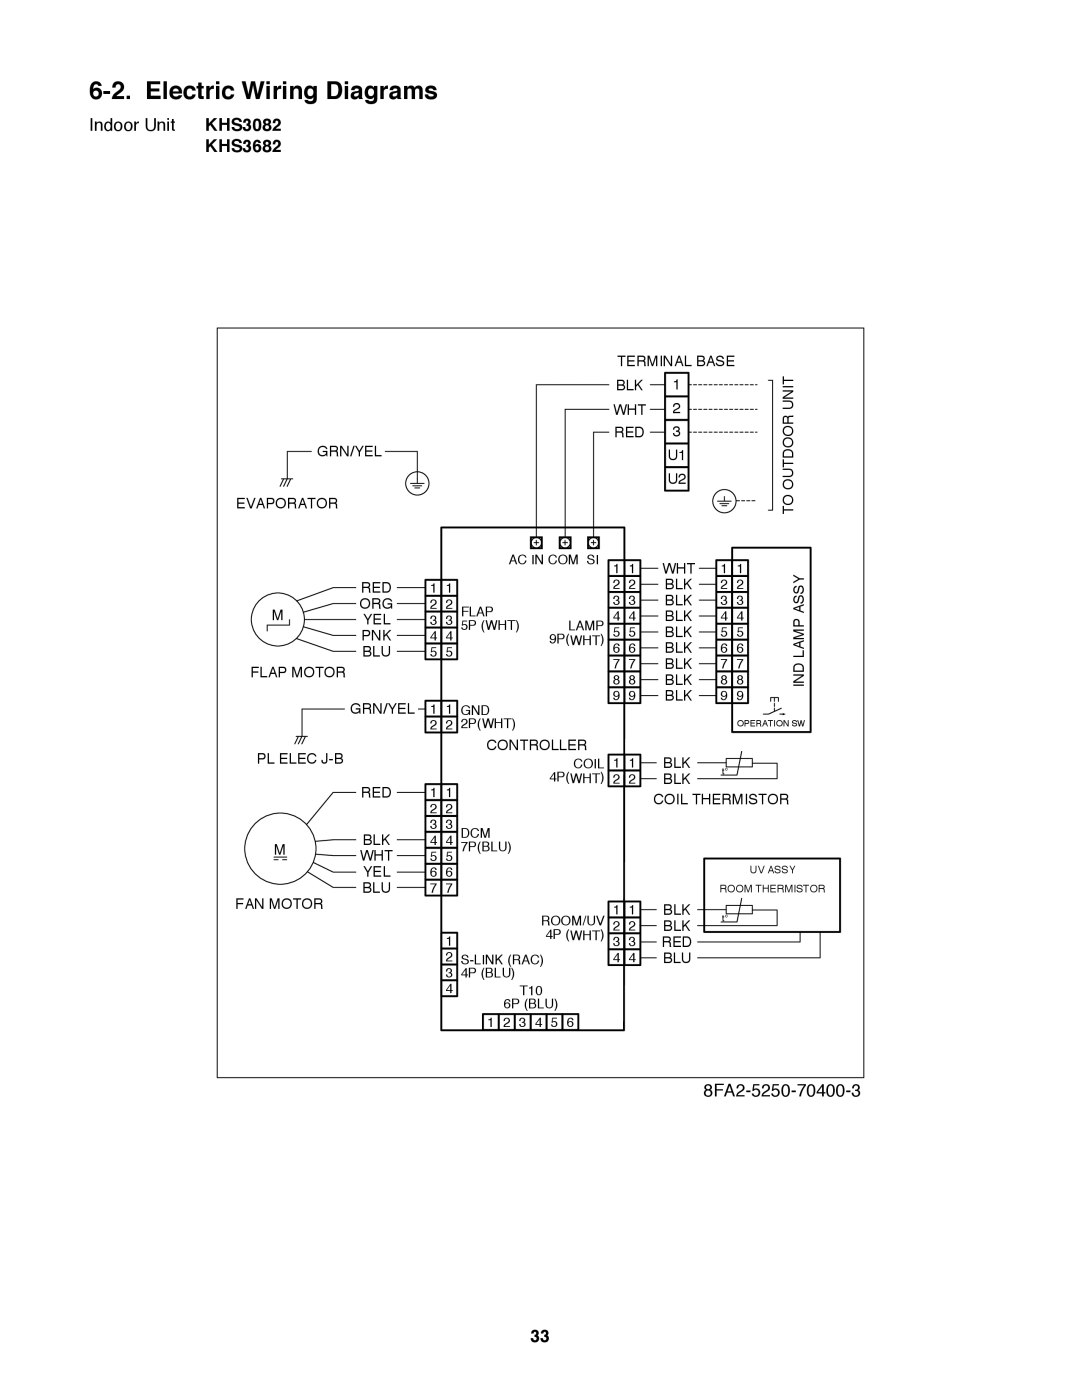 Sanyo KHS3682 + CH3682, KHS3082 + CH3082 service manual Electric Wiring Diagrams, KHS3082 KHS3682, 8FA2-5250-70400-3 